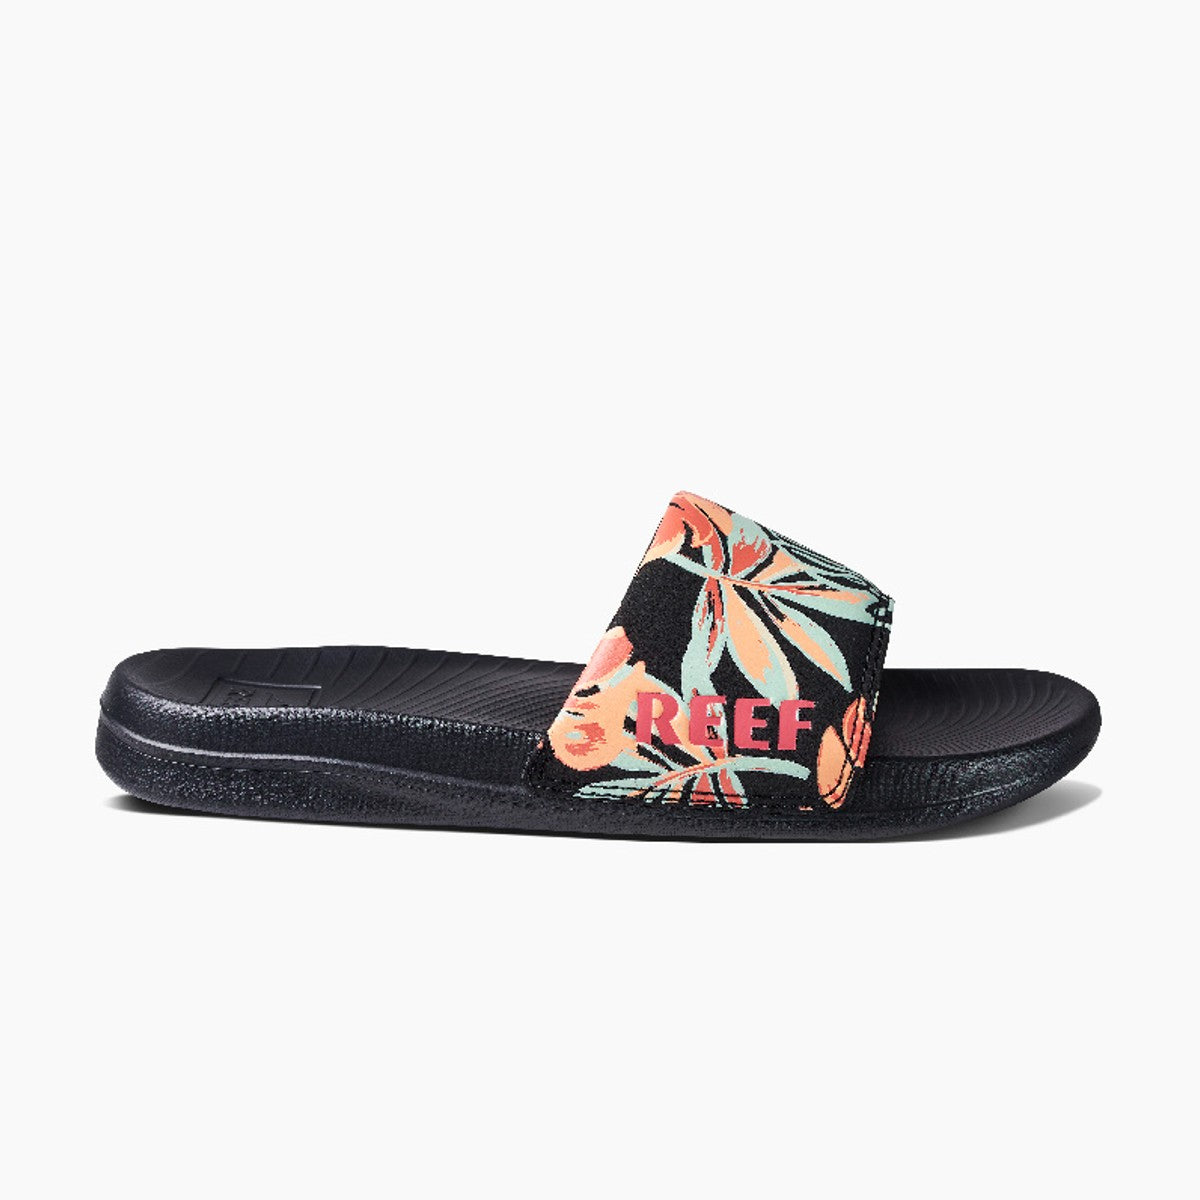 Reef One Women's Slide Sandals